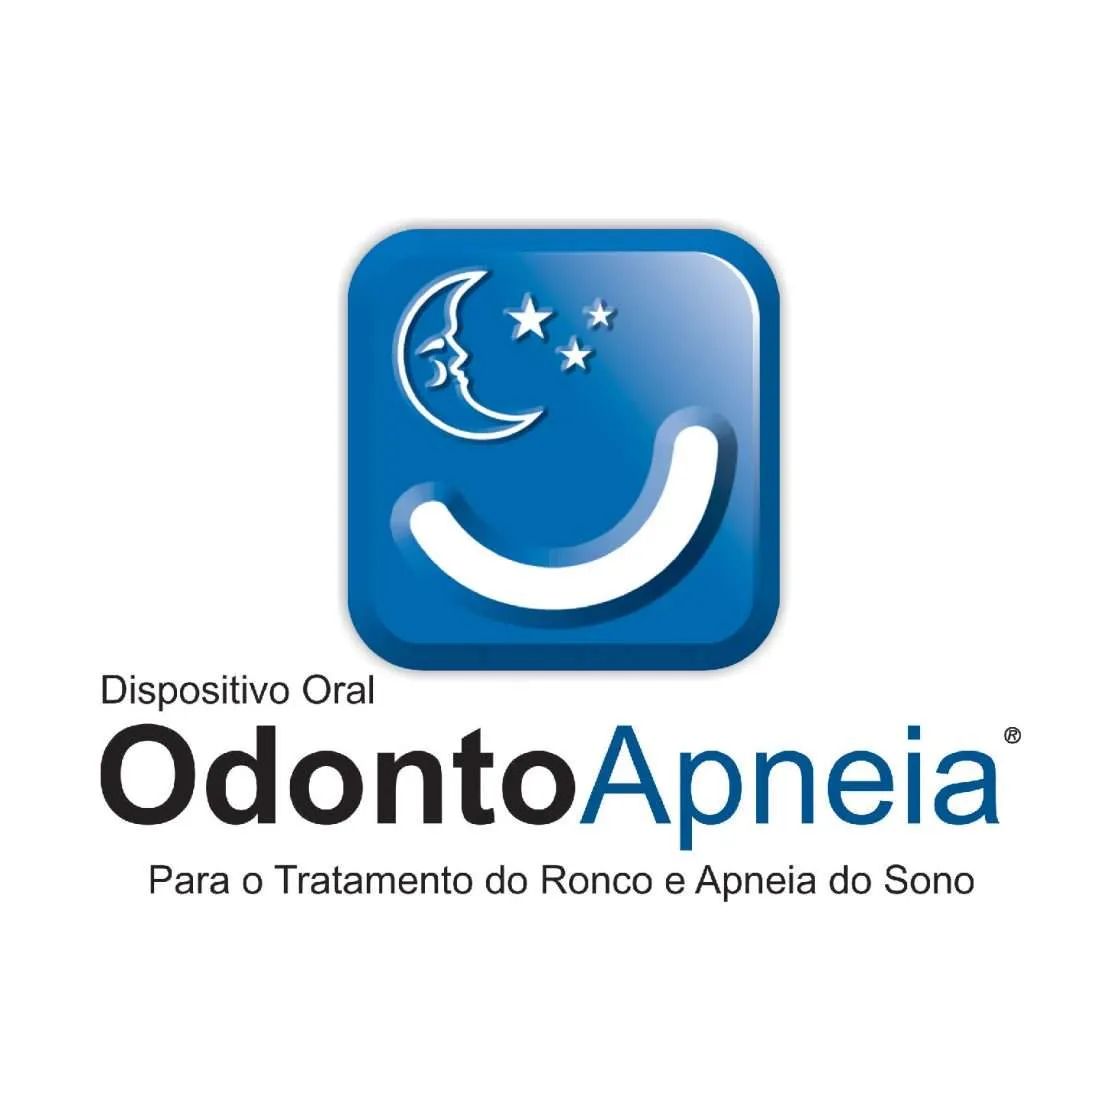 Dispositivo Oral - Odonto Apneia